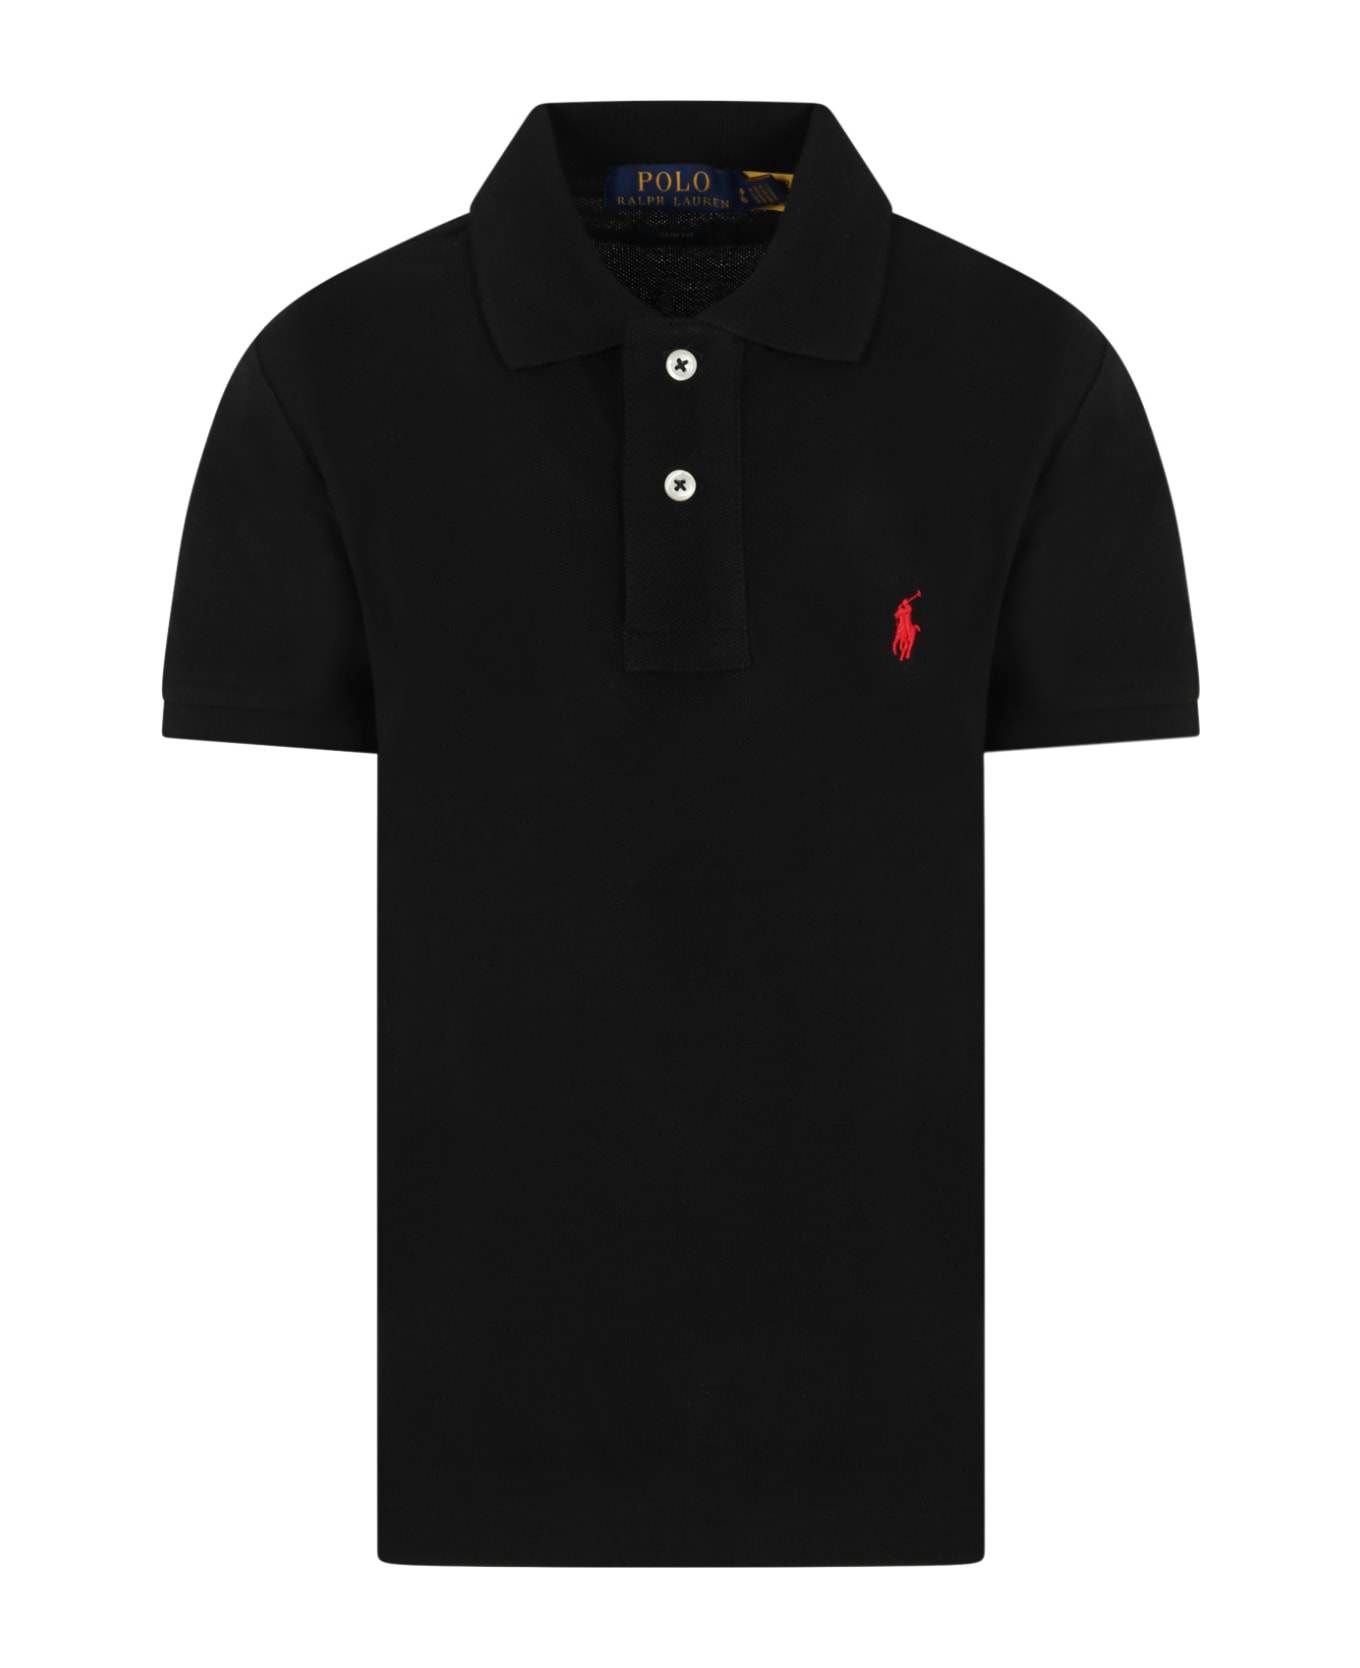 Ralph Lauren Black Polo Shirt For Boy With Pony Logo - Black